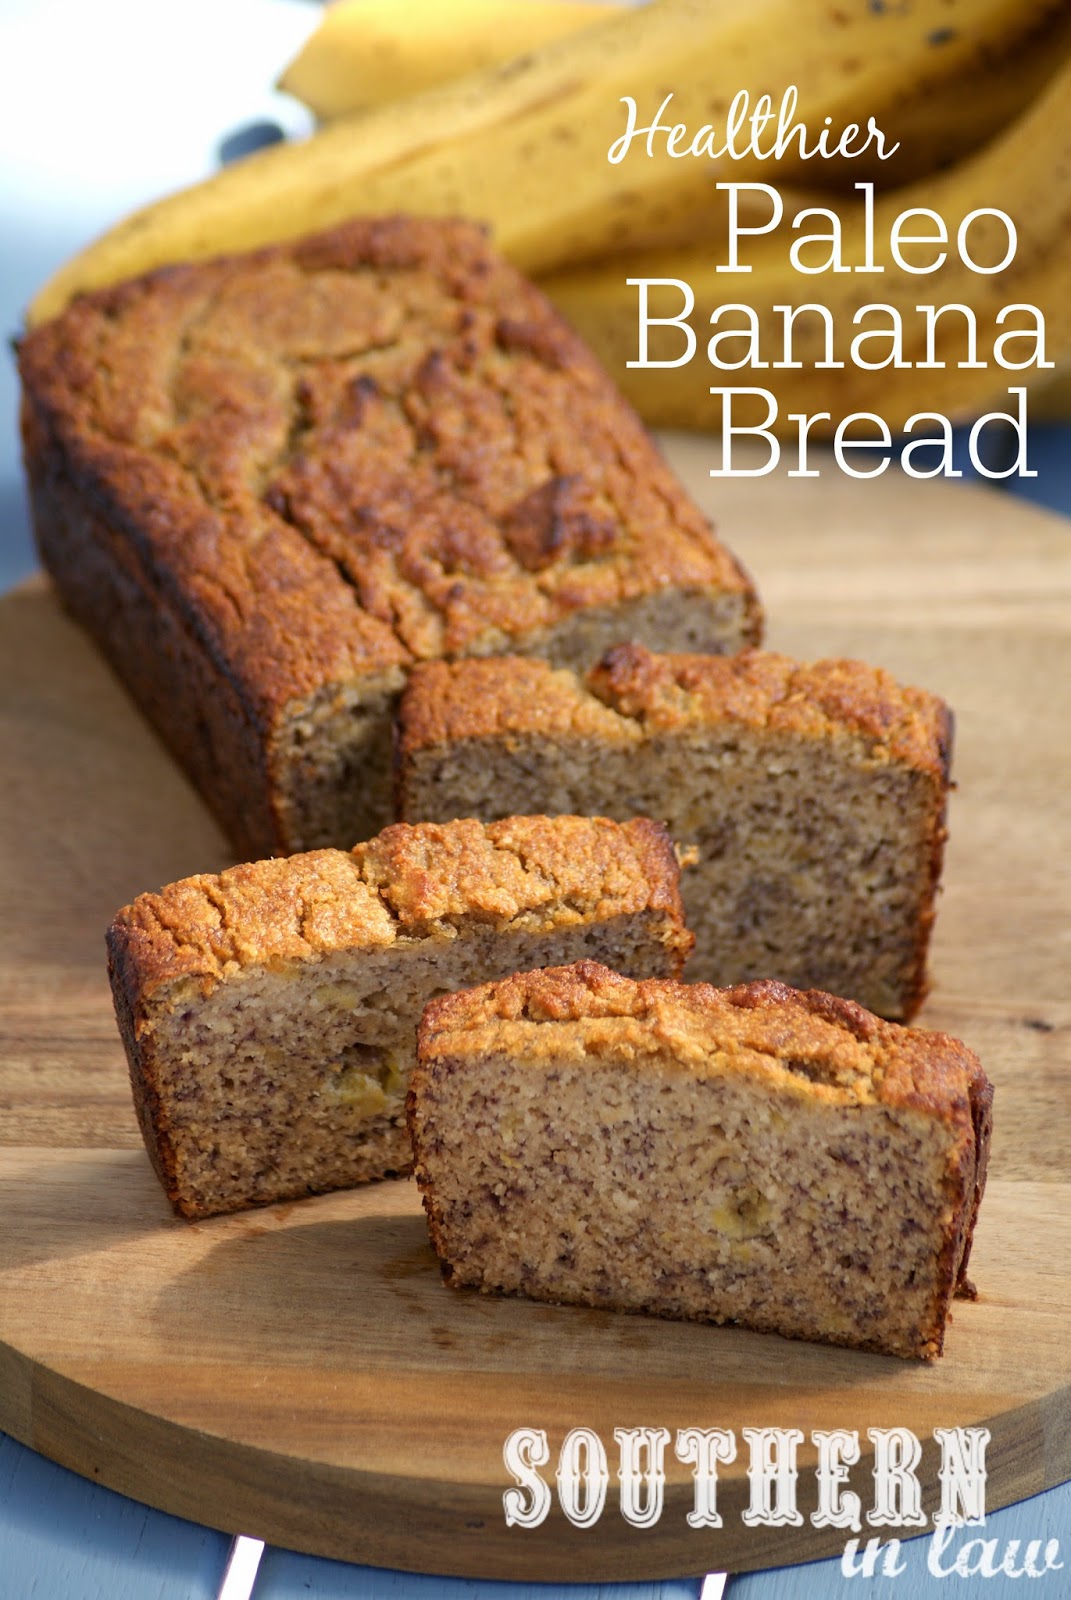 Best Banana Bread Recipes / The BEST Banana Bread | The Domestic Rebel